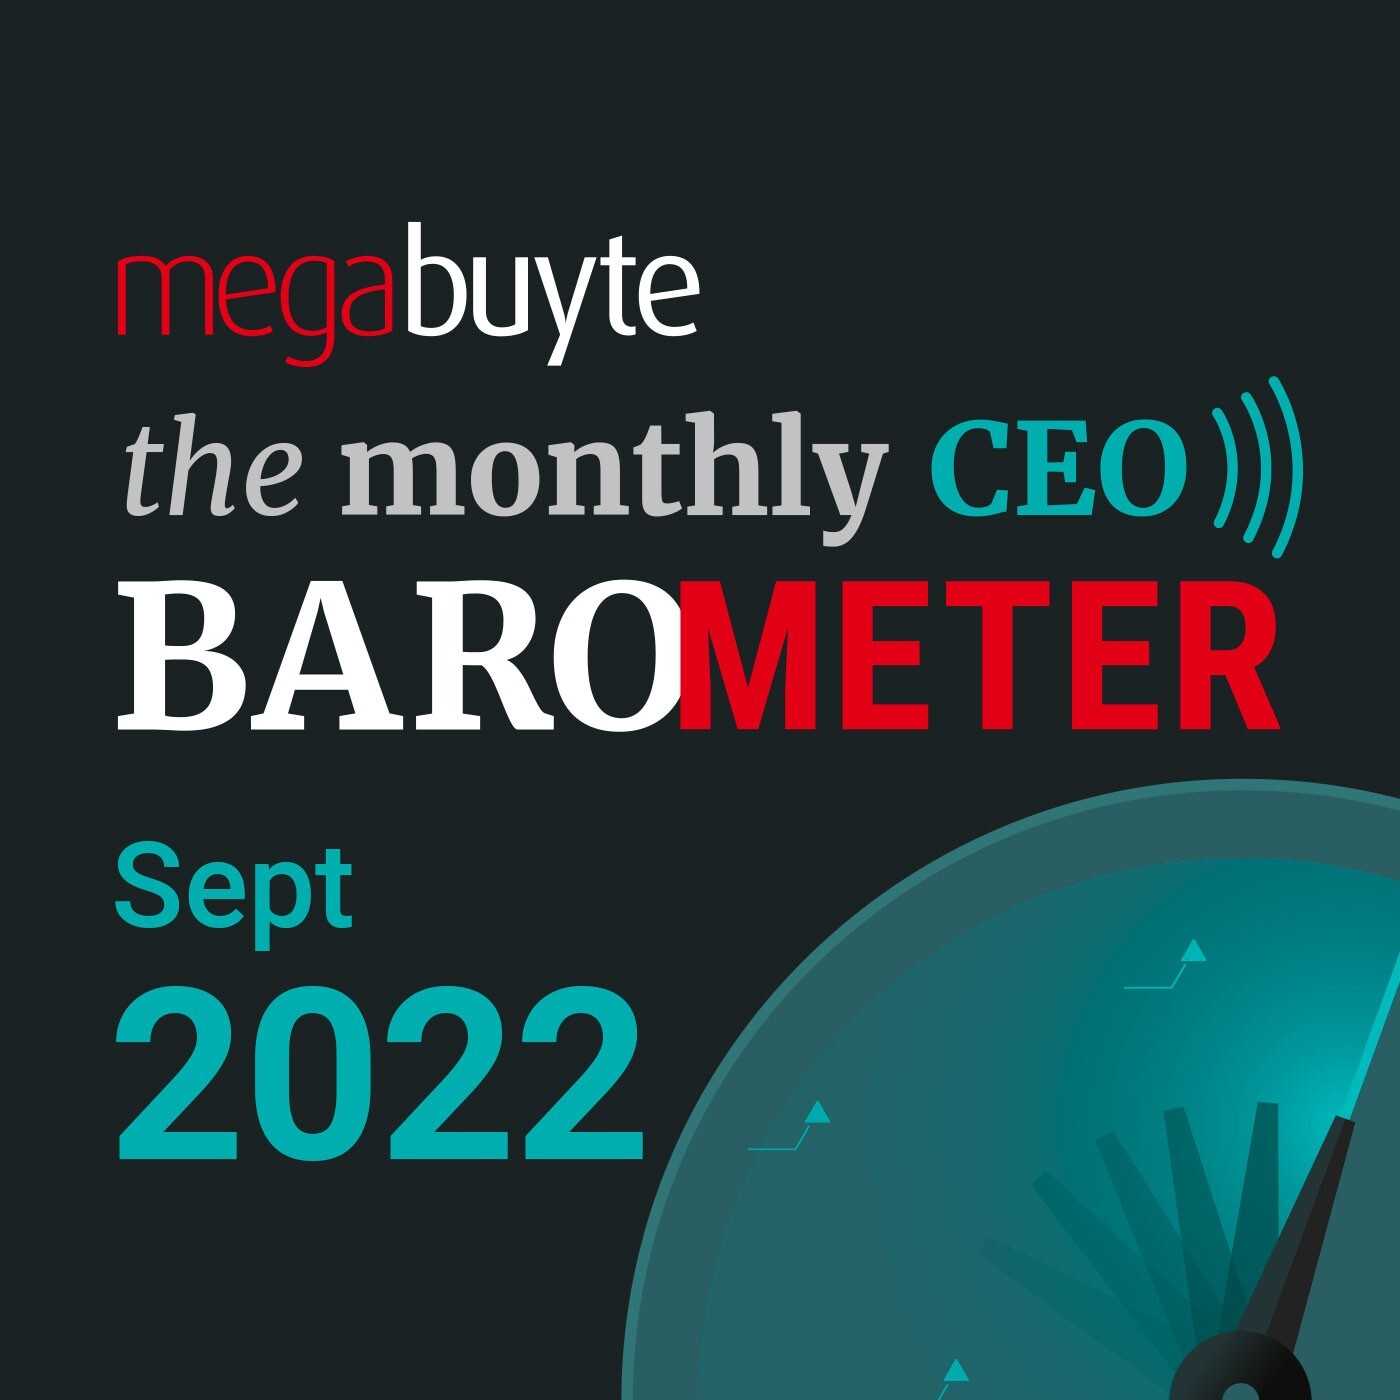 Megabuyte CEOBarometer - September 2022 update